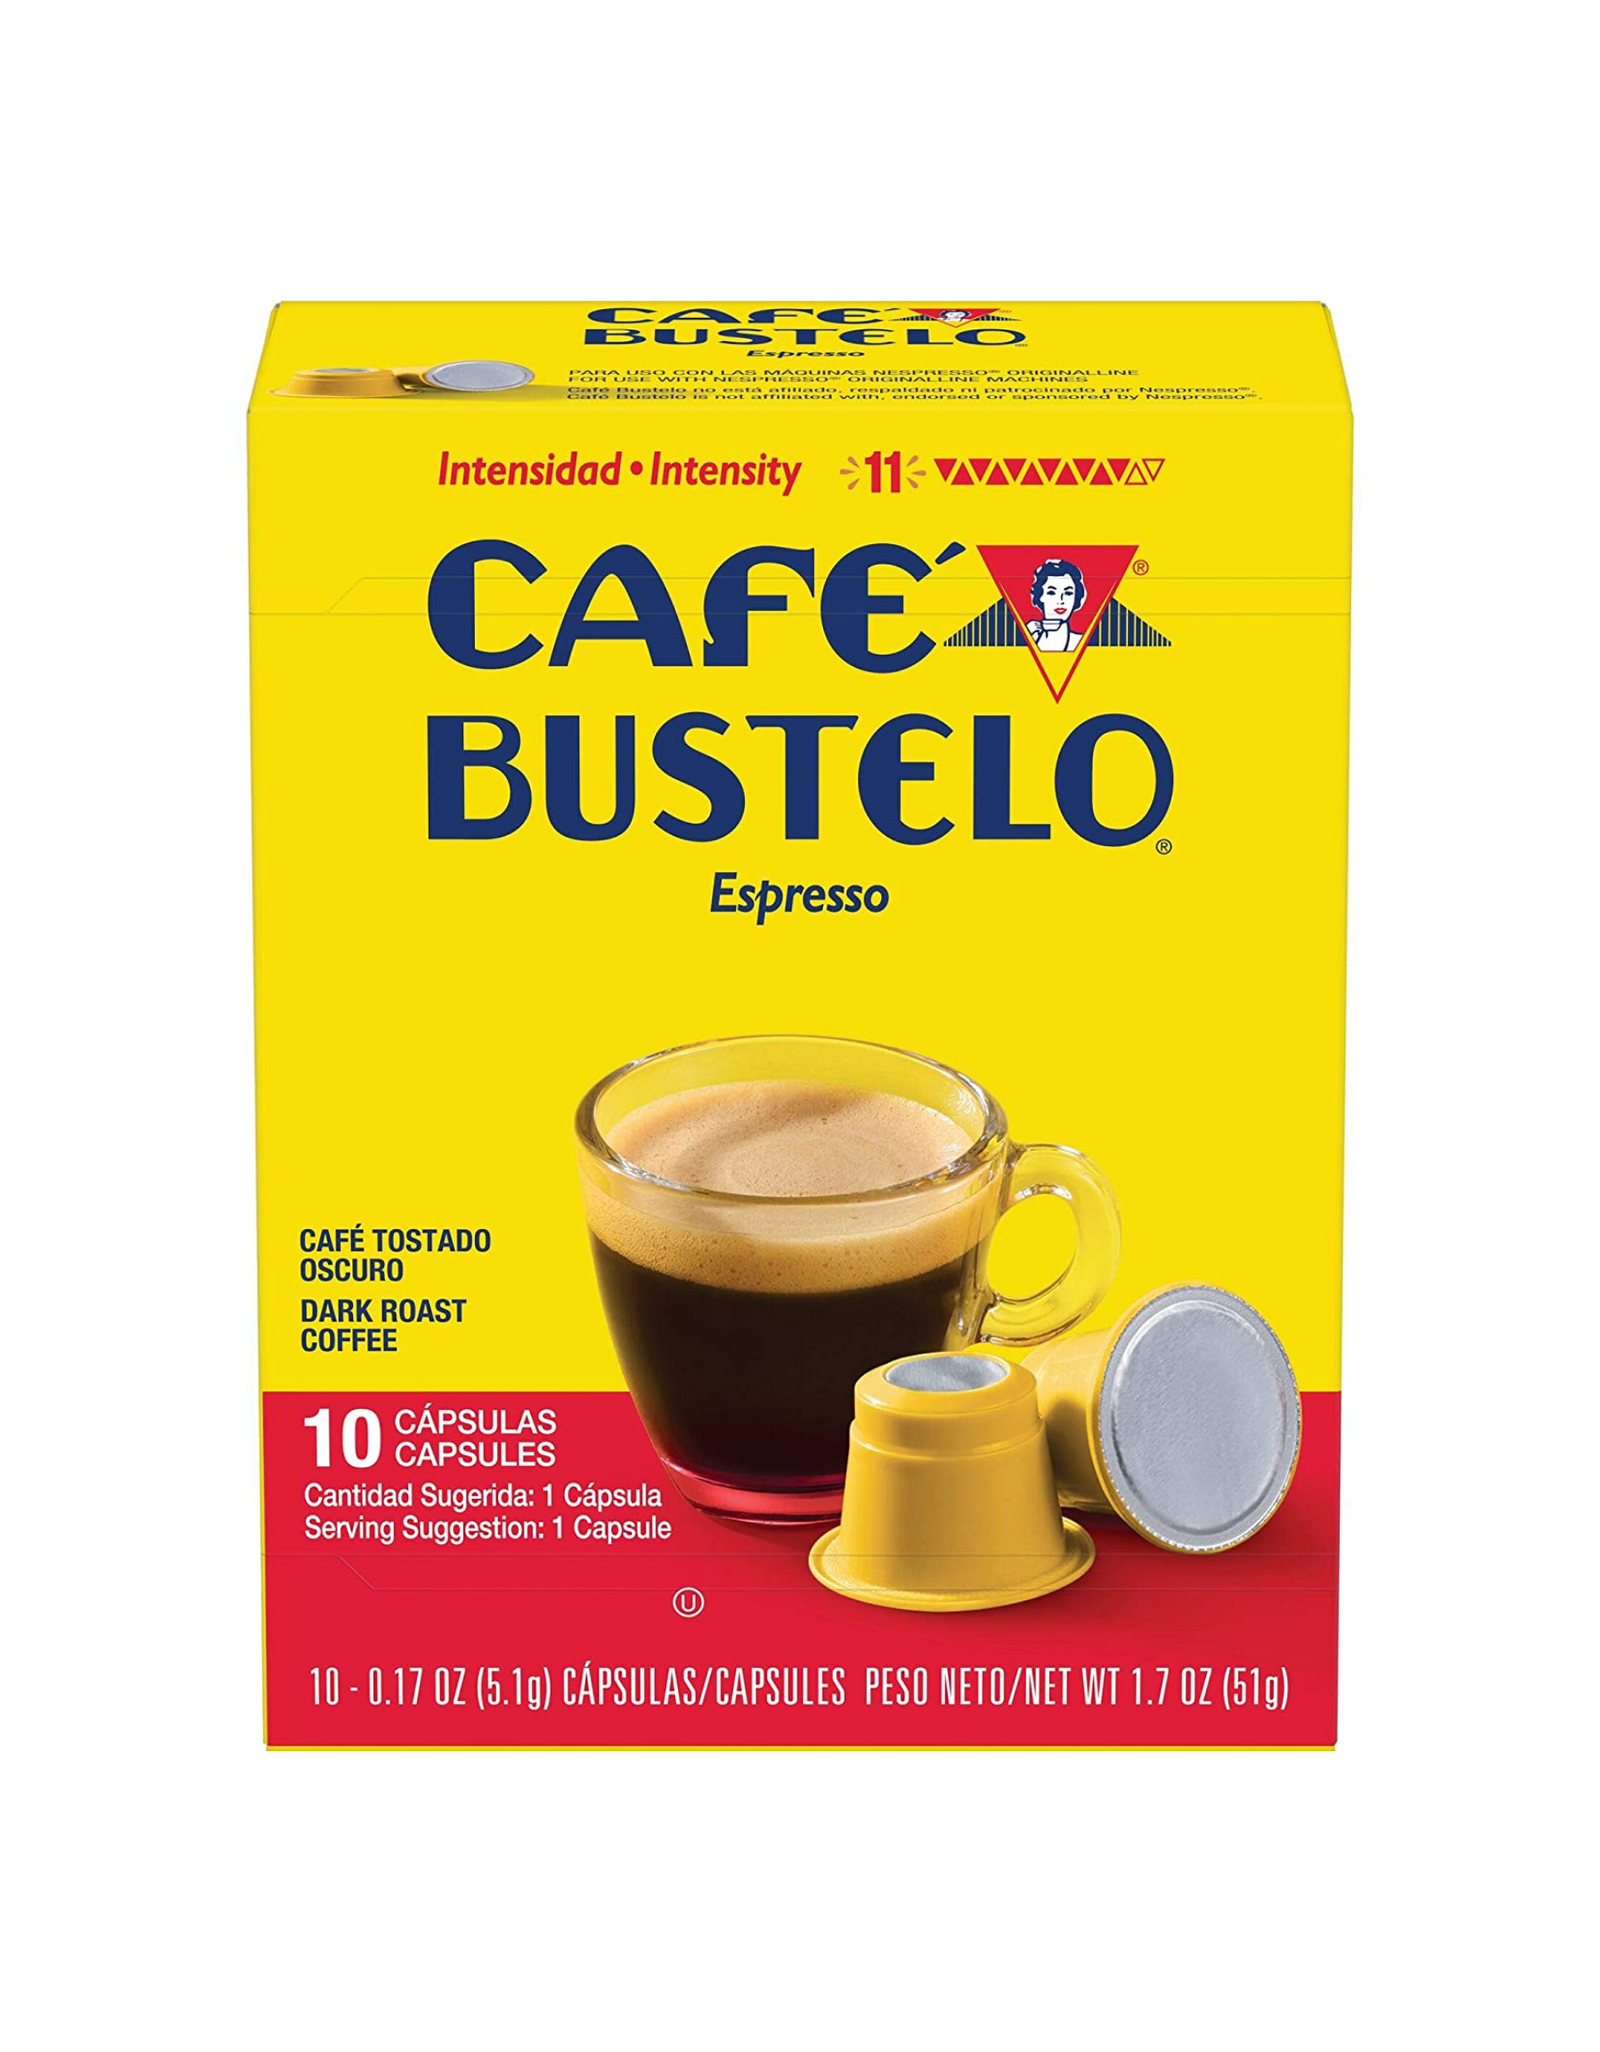 Café Bustelo Espresso Dark Roast Coffee, 40 Count Capsules for Espresso Machines, 11 Intensity, 10 Ct(Pack of 4)